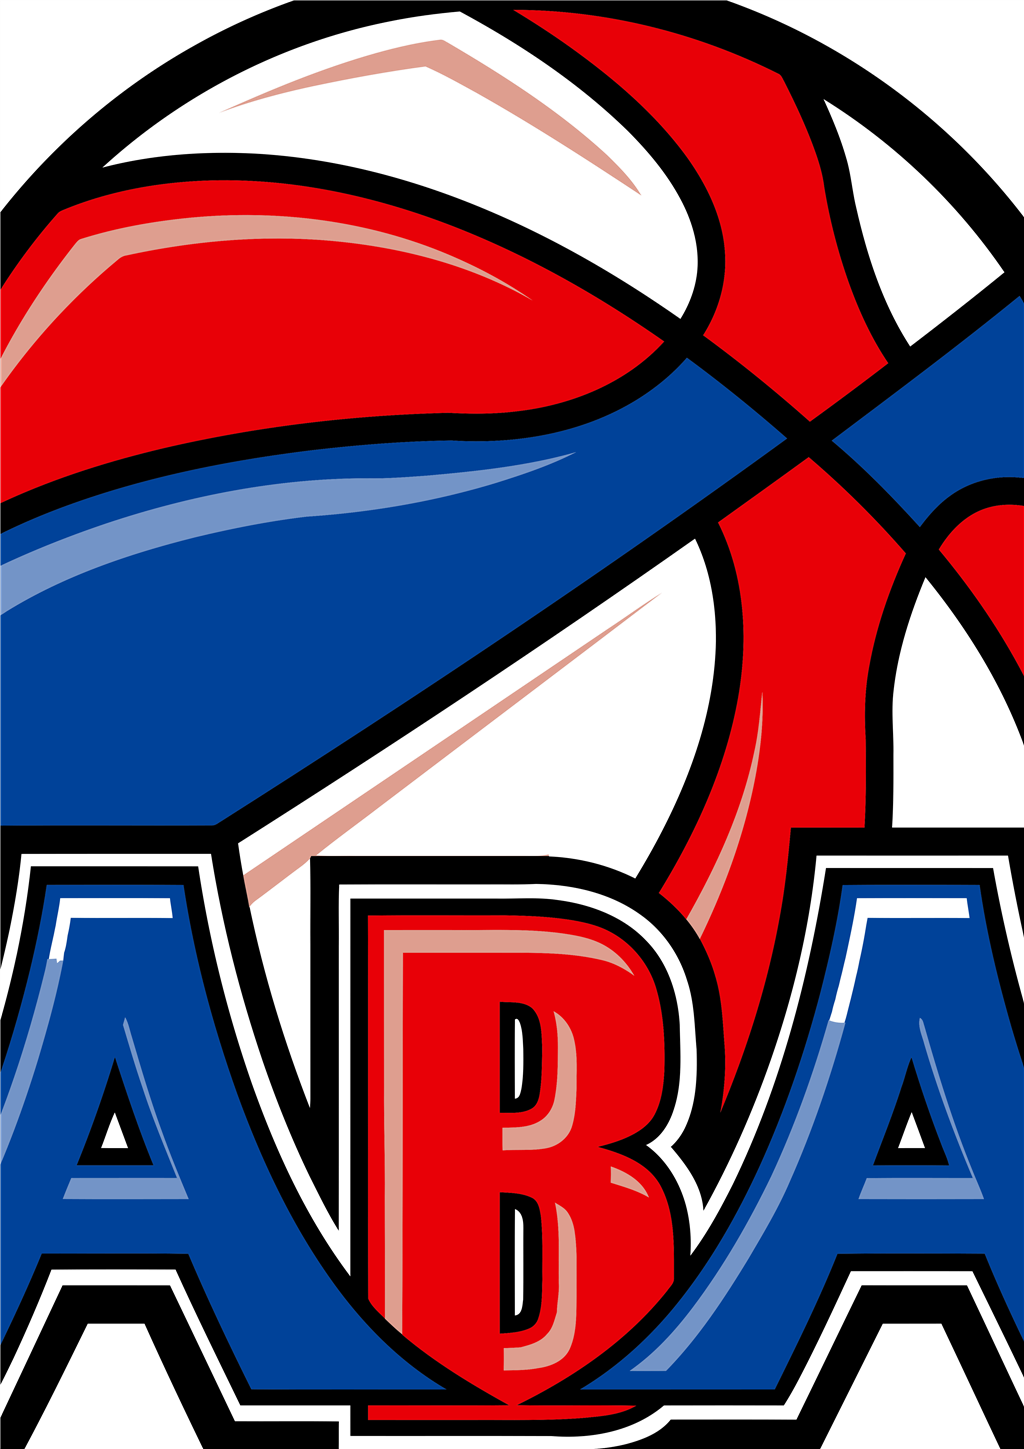 The American Bar Association logotype, transparent .png, medium, large